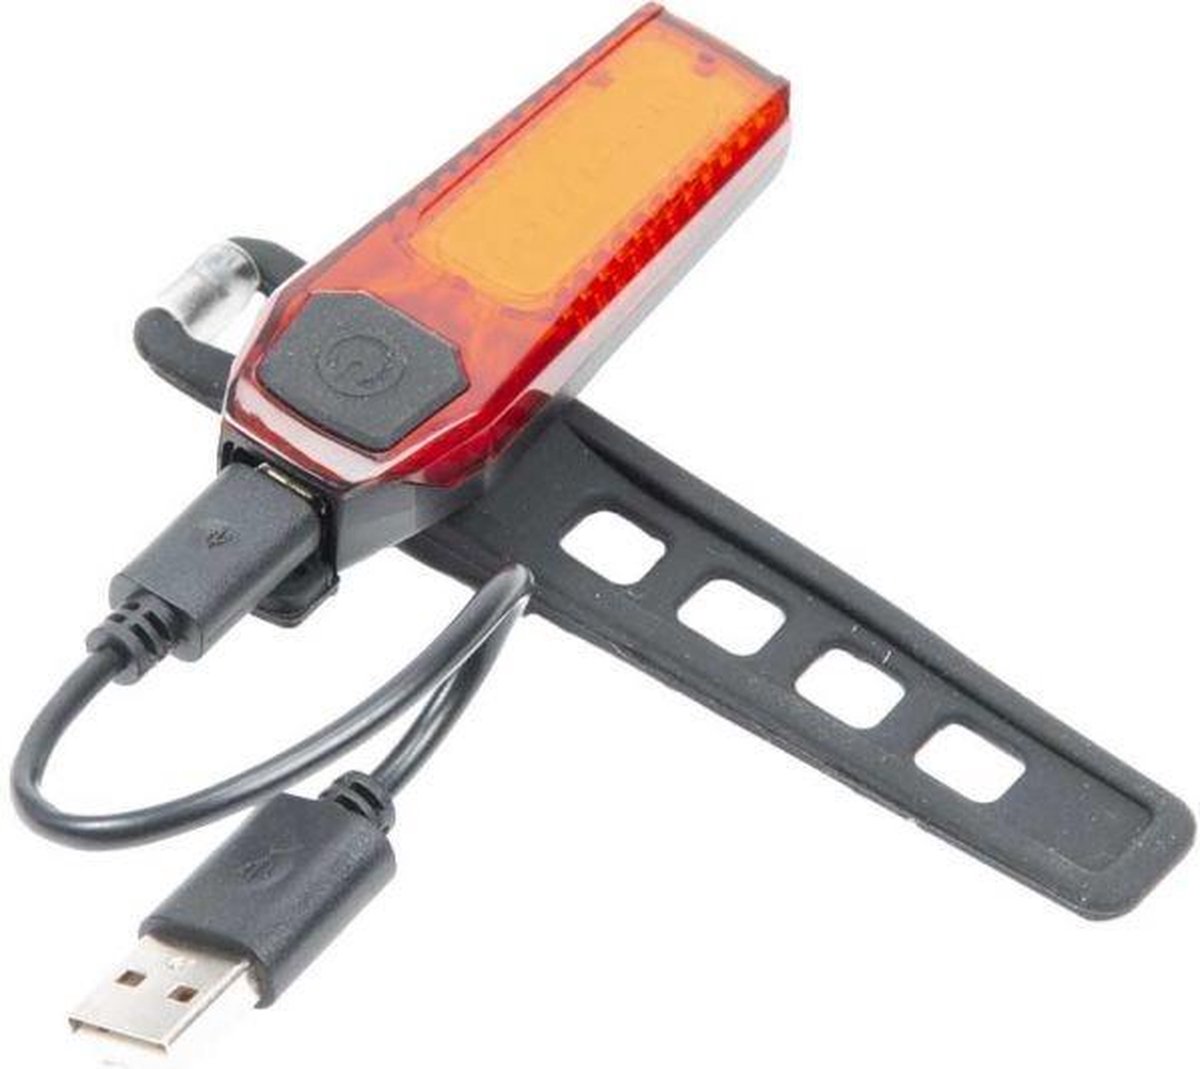 Robuuste oplaadbare LED fietsverlichting met grote lichtopbrengst - rood - inclusief micro USB kabel